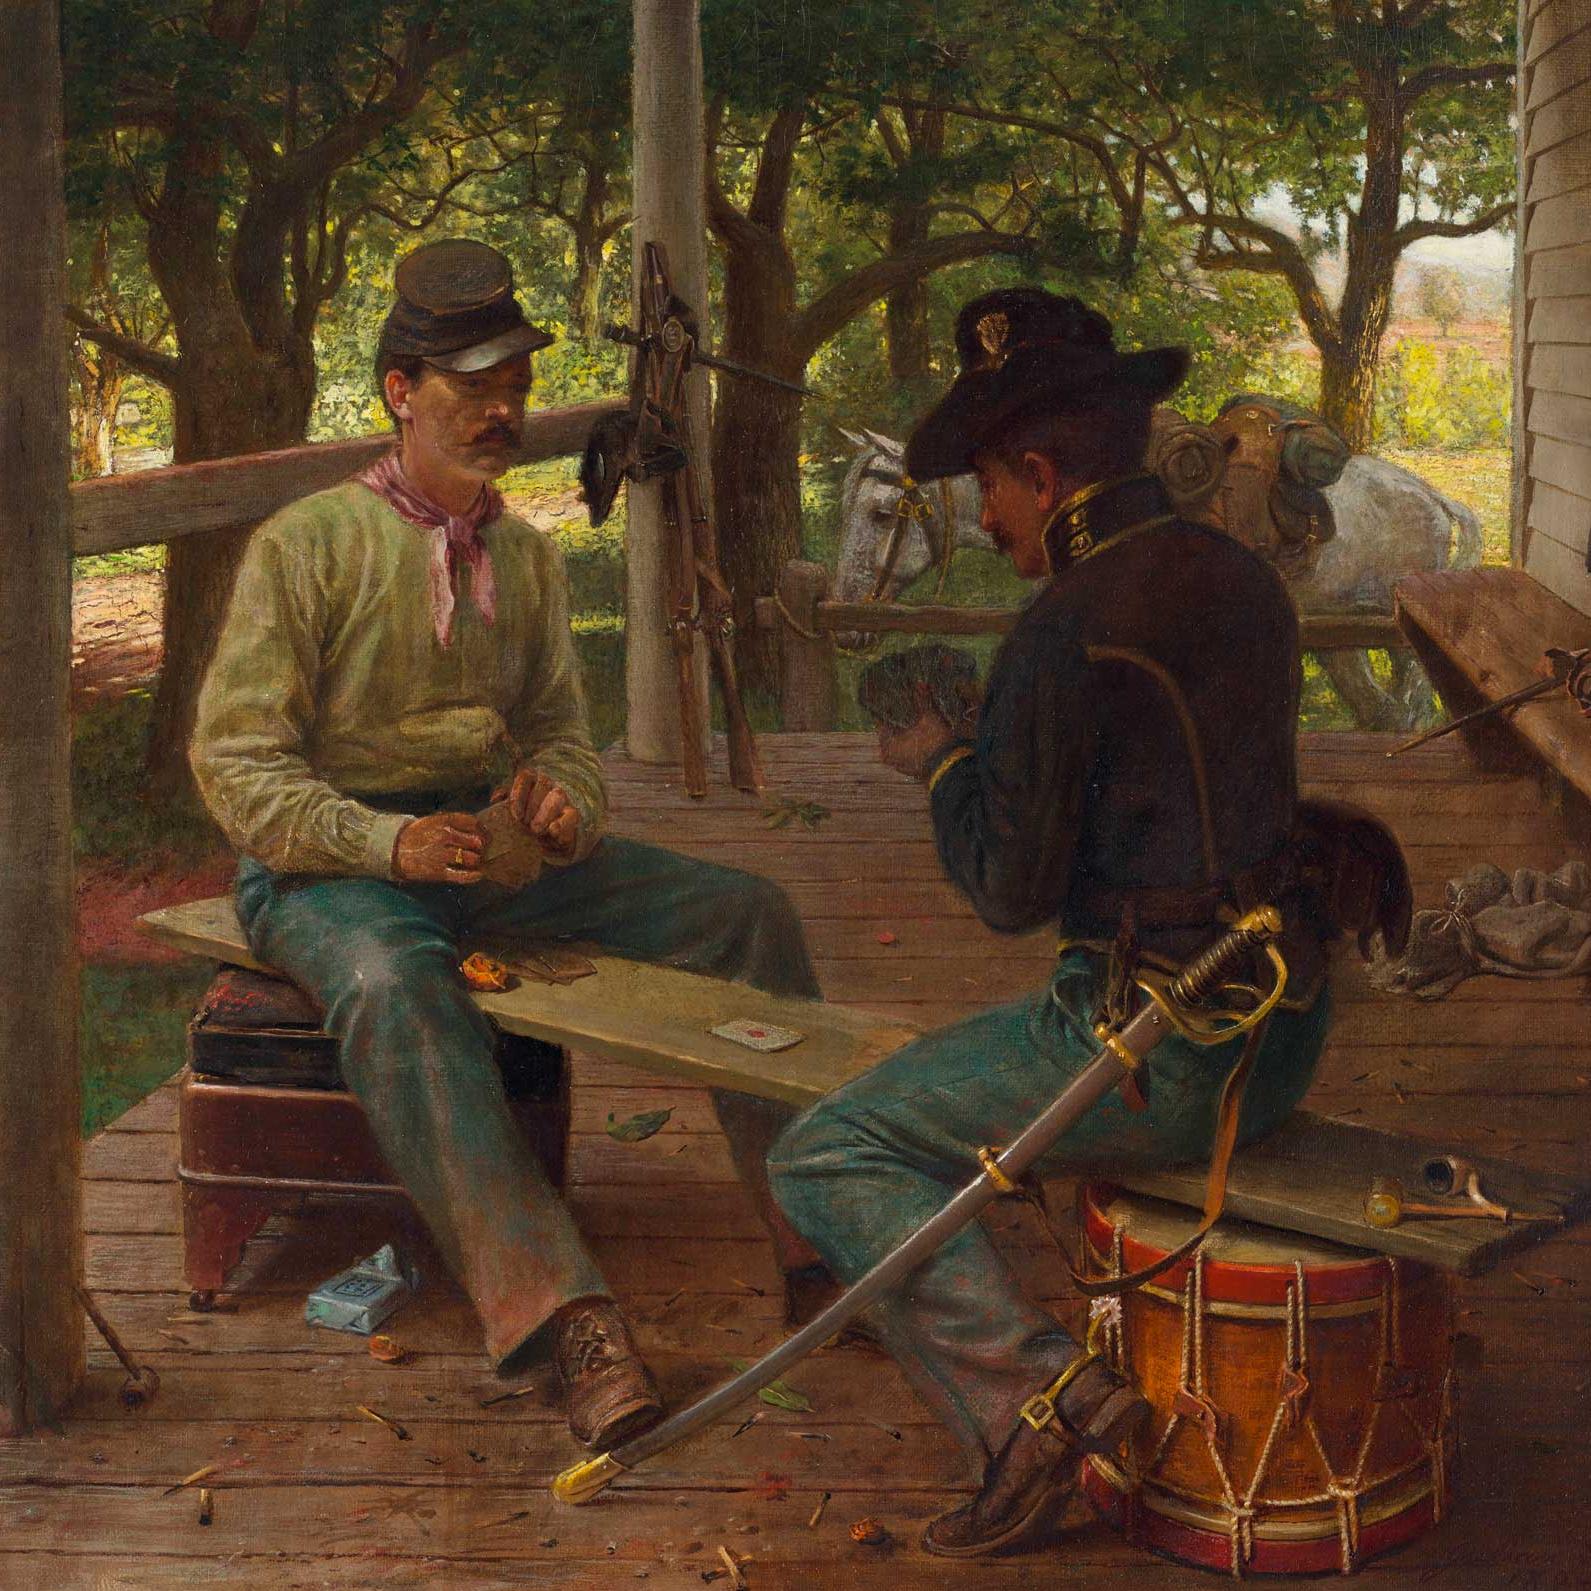 Julian Scott, A Friendly Game, 1894, oil on canvas